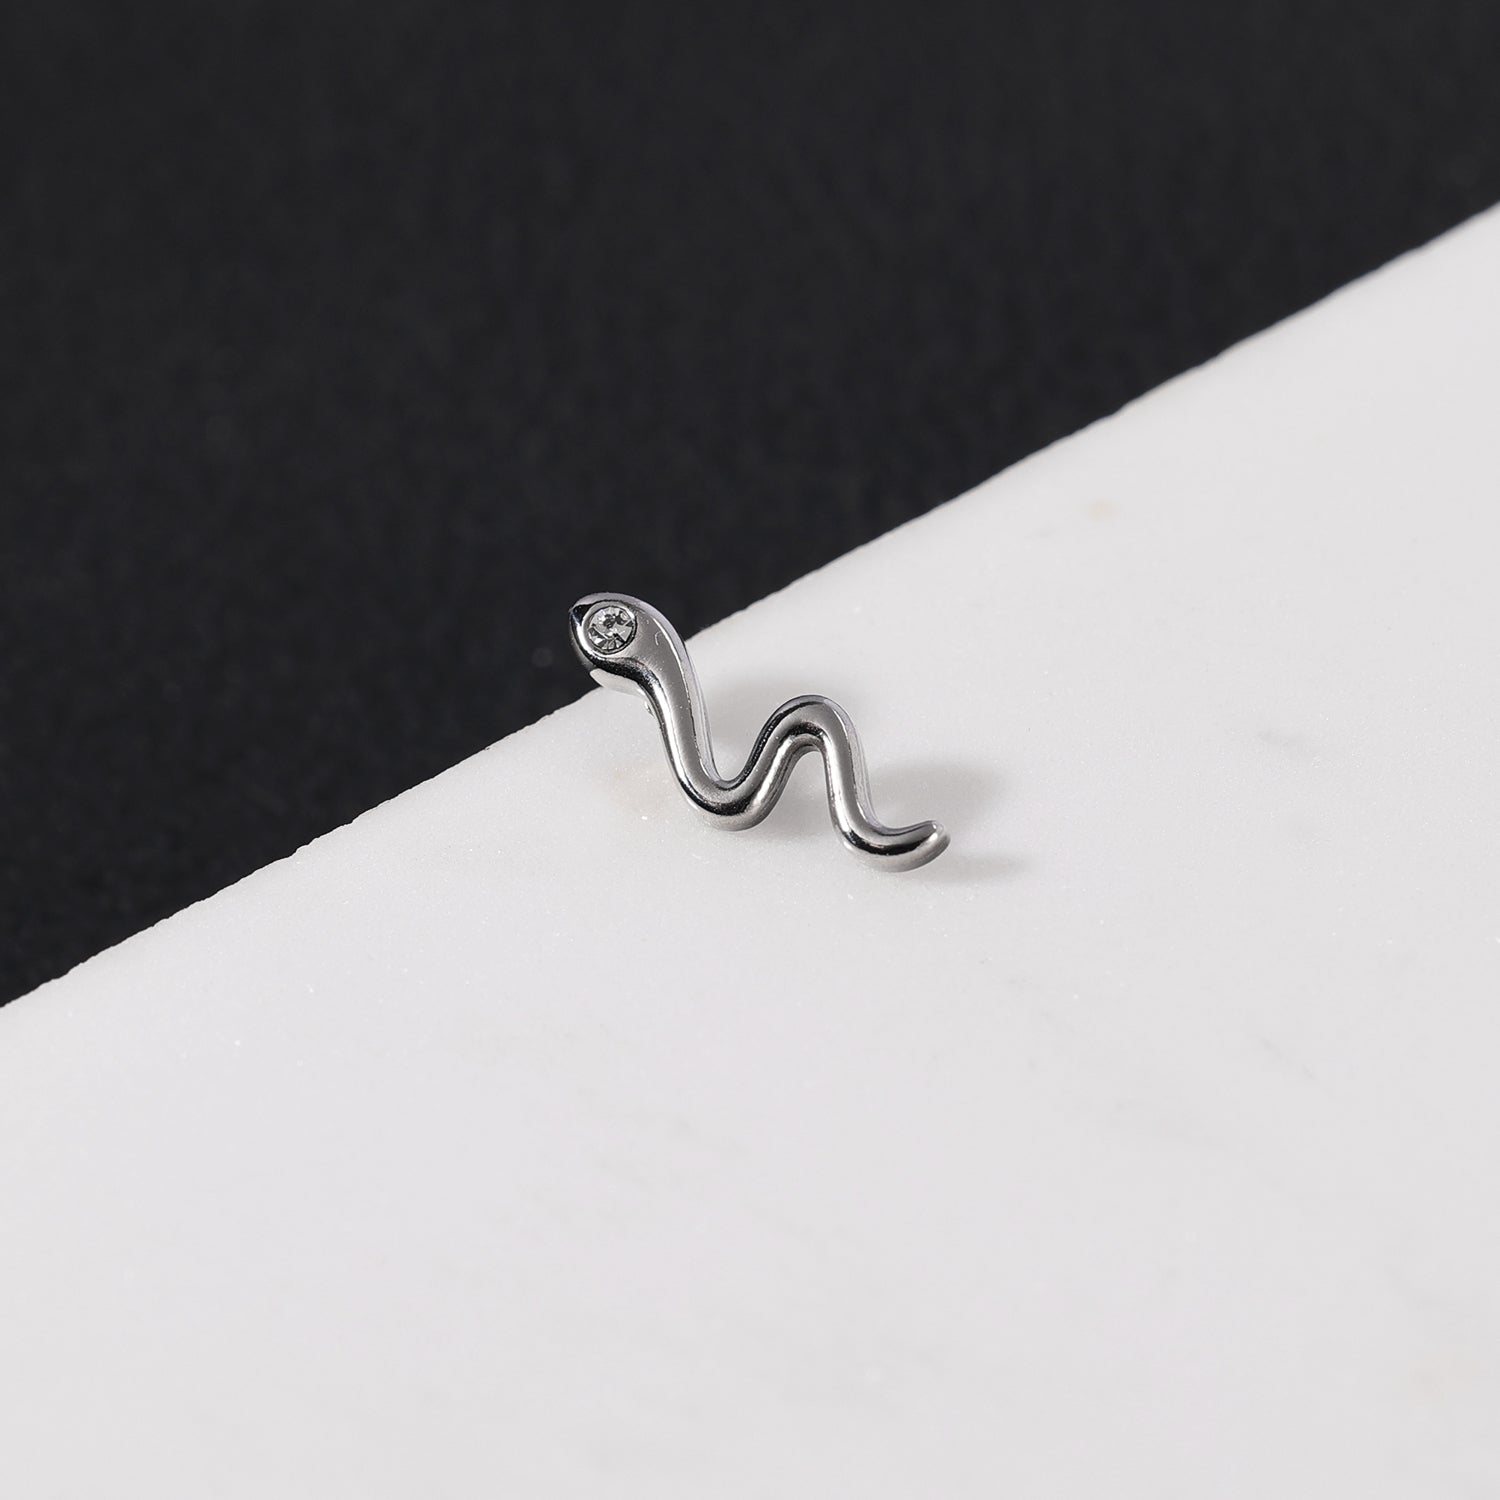 4pcs Snake Dermal Anchor Tops Surgical Steel Internally Threaded Skin Diver Piercings